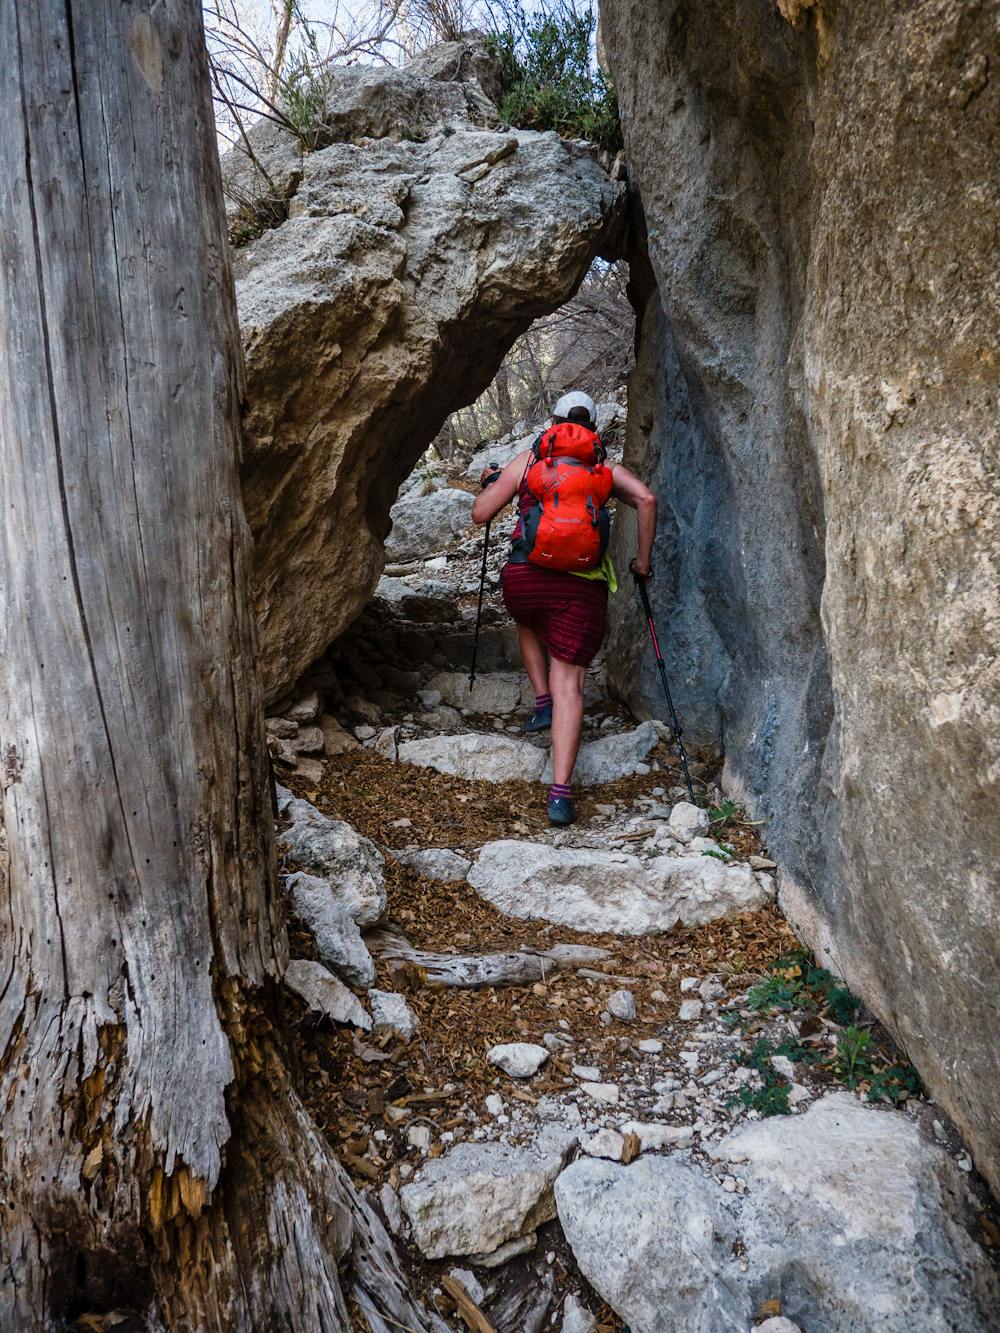 A rocky passage on the Bear Canyon Trail.